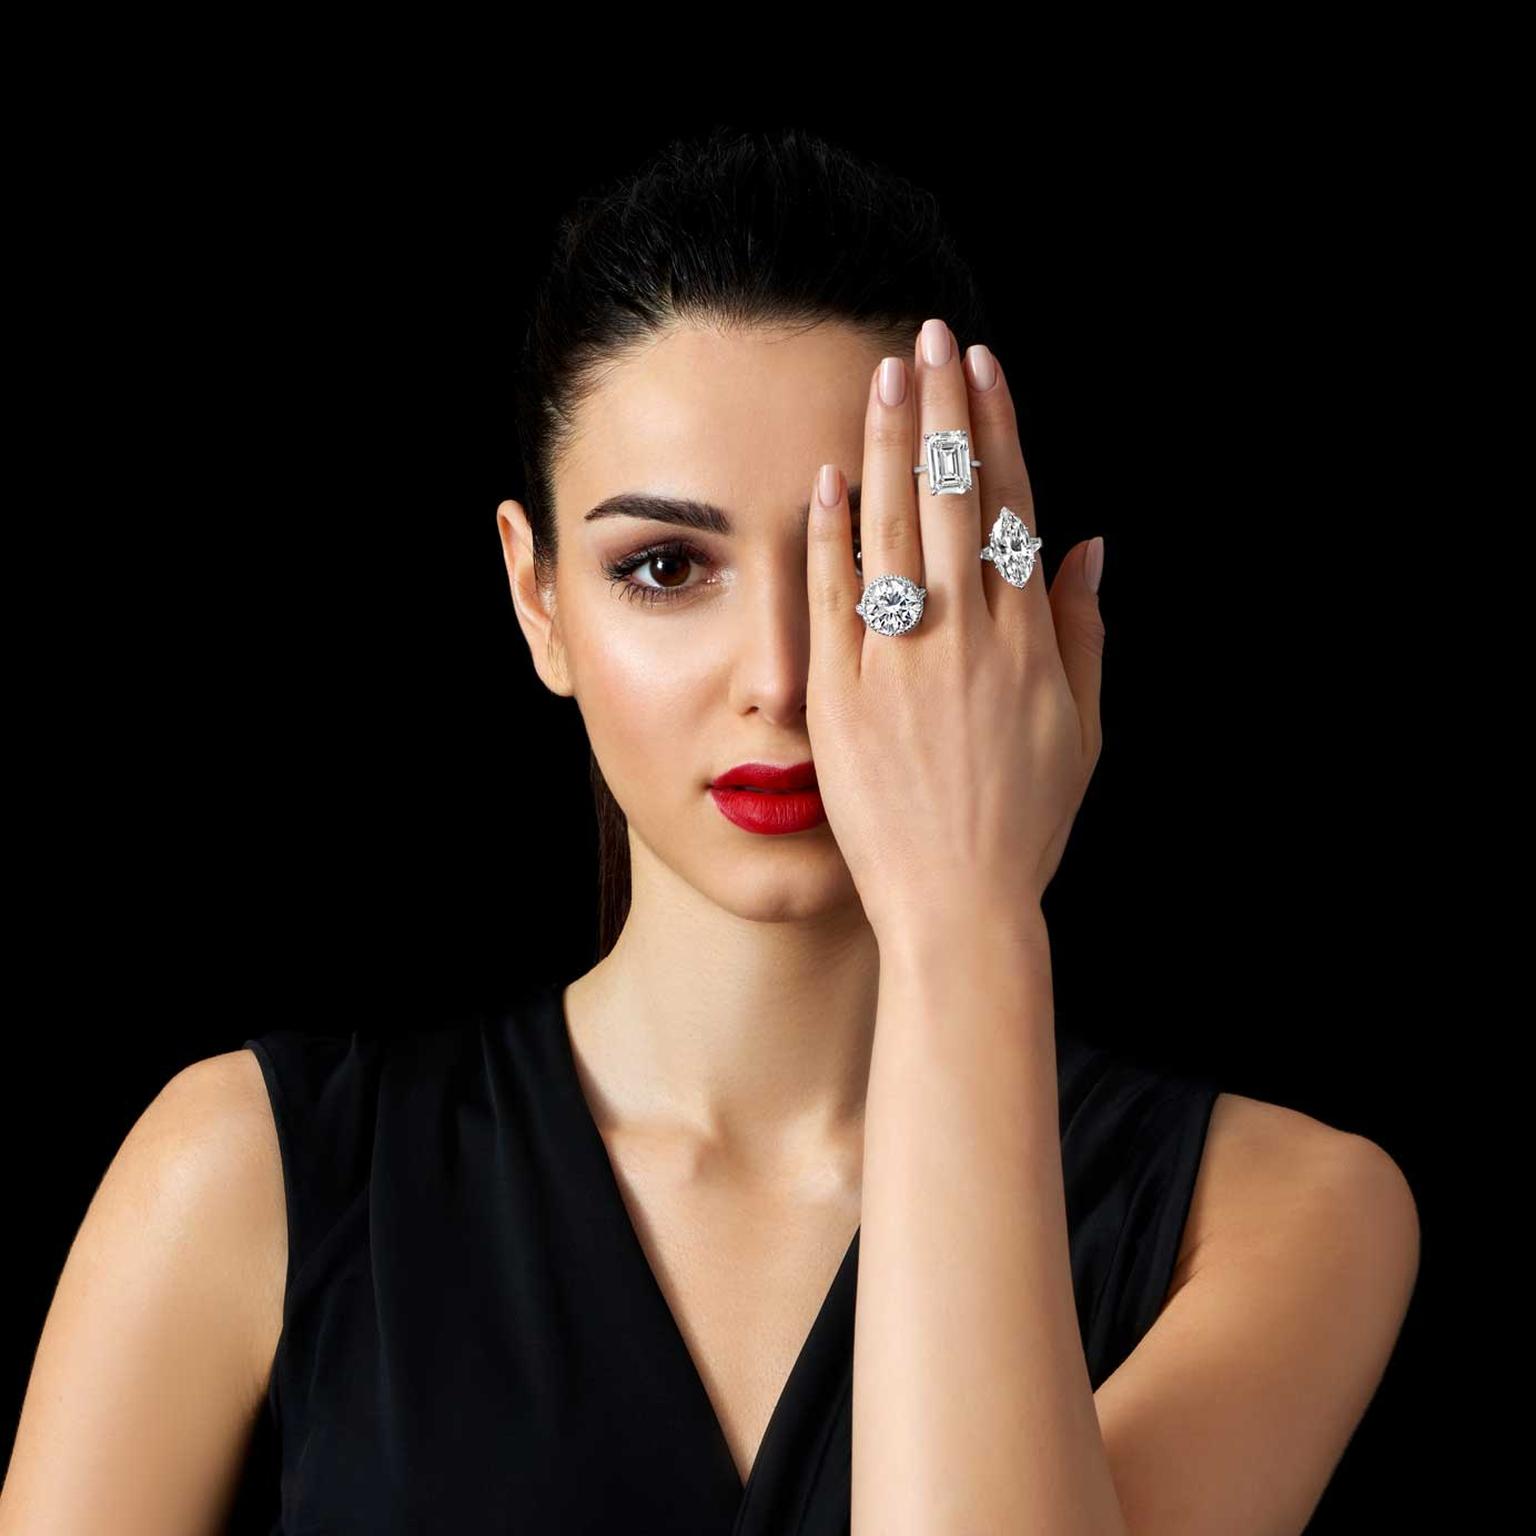 Nour portrait with diamond rings